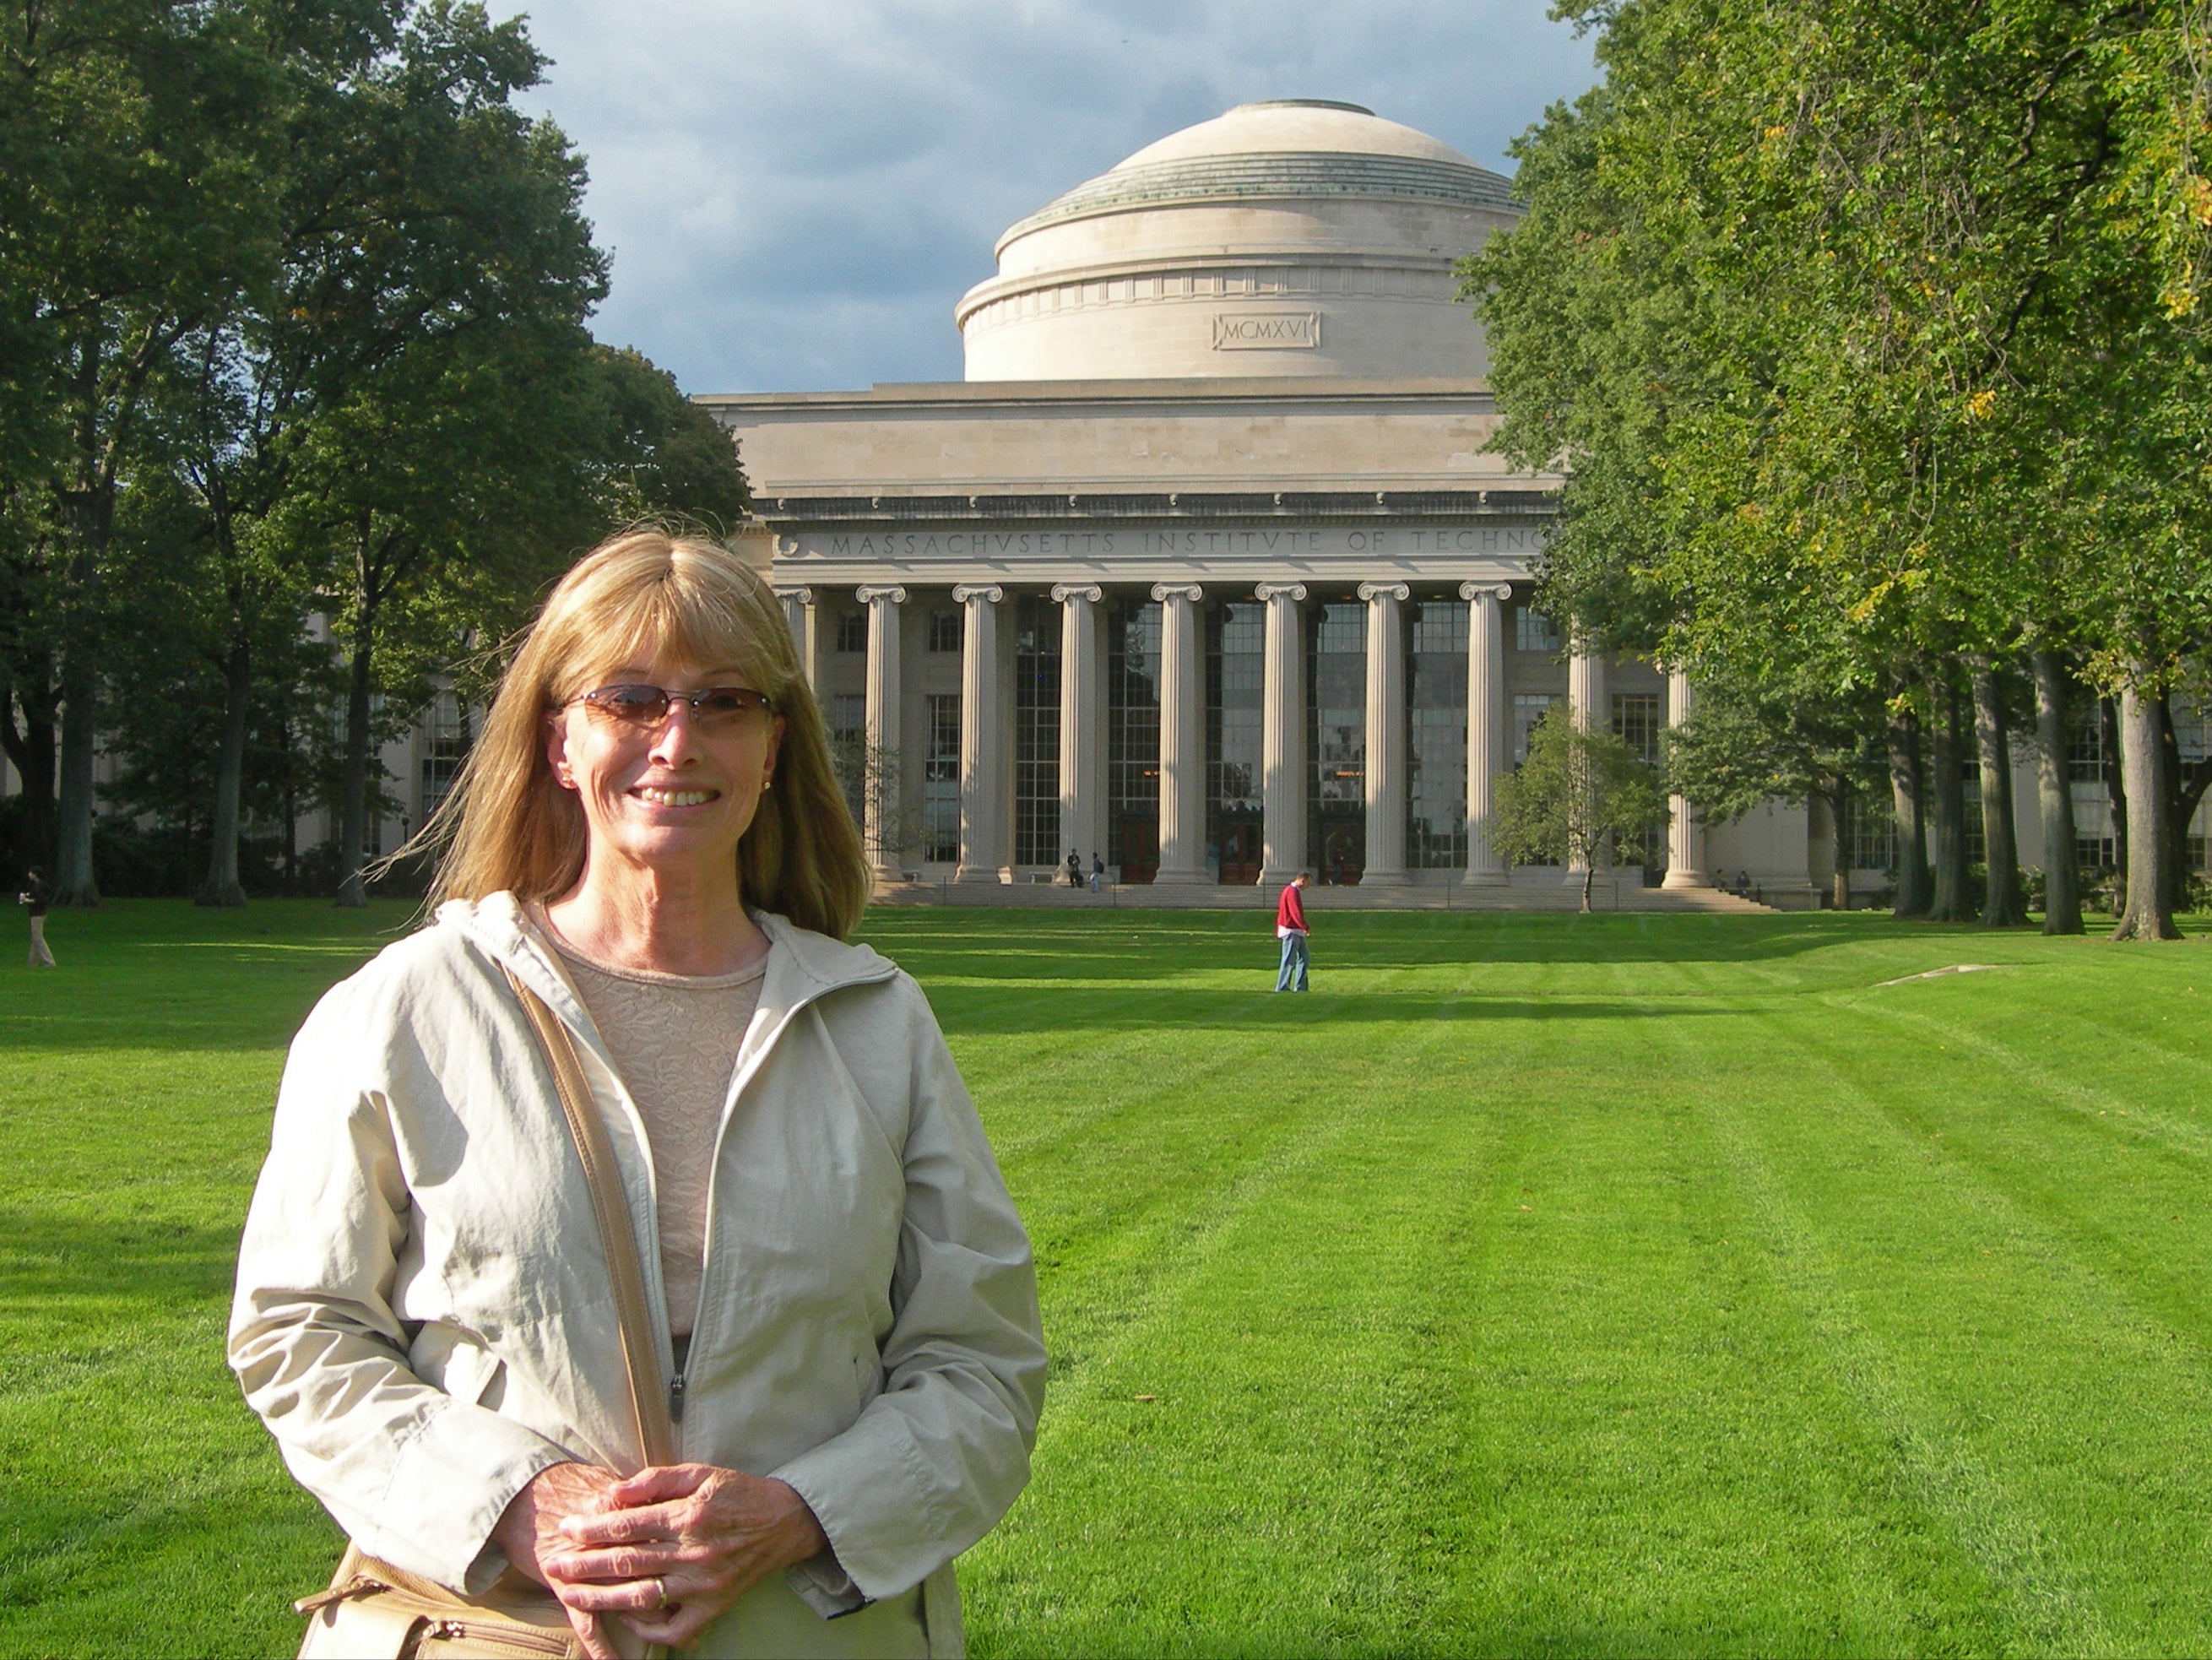 A return visit to MIT in 2008